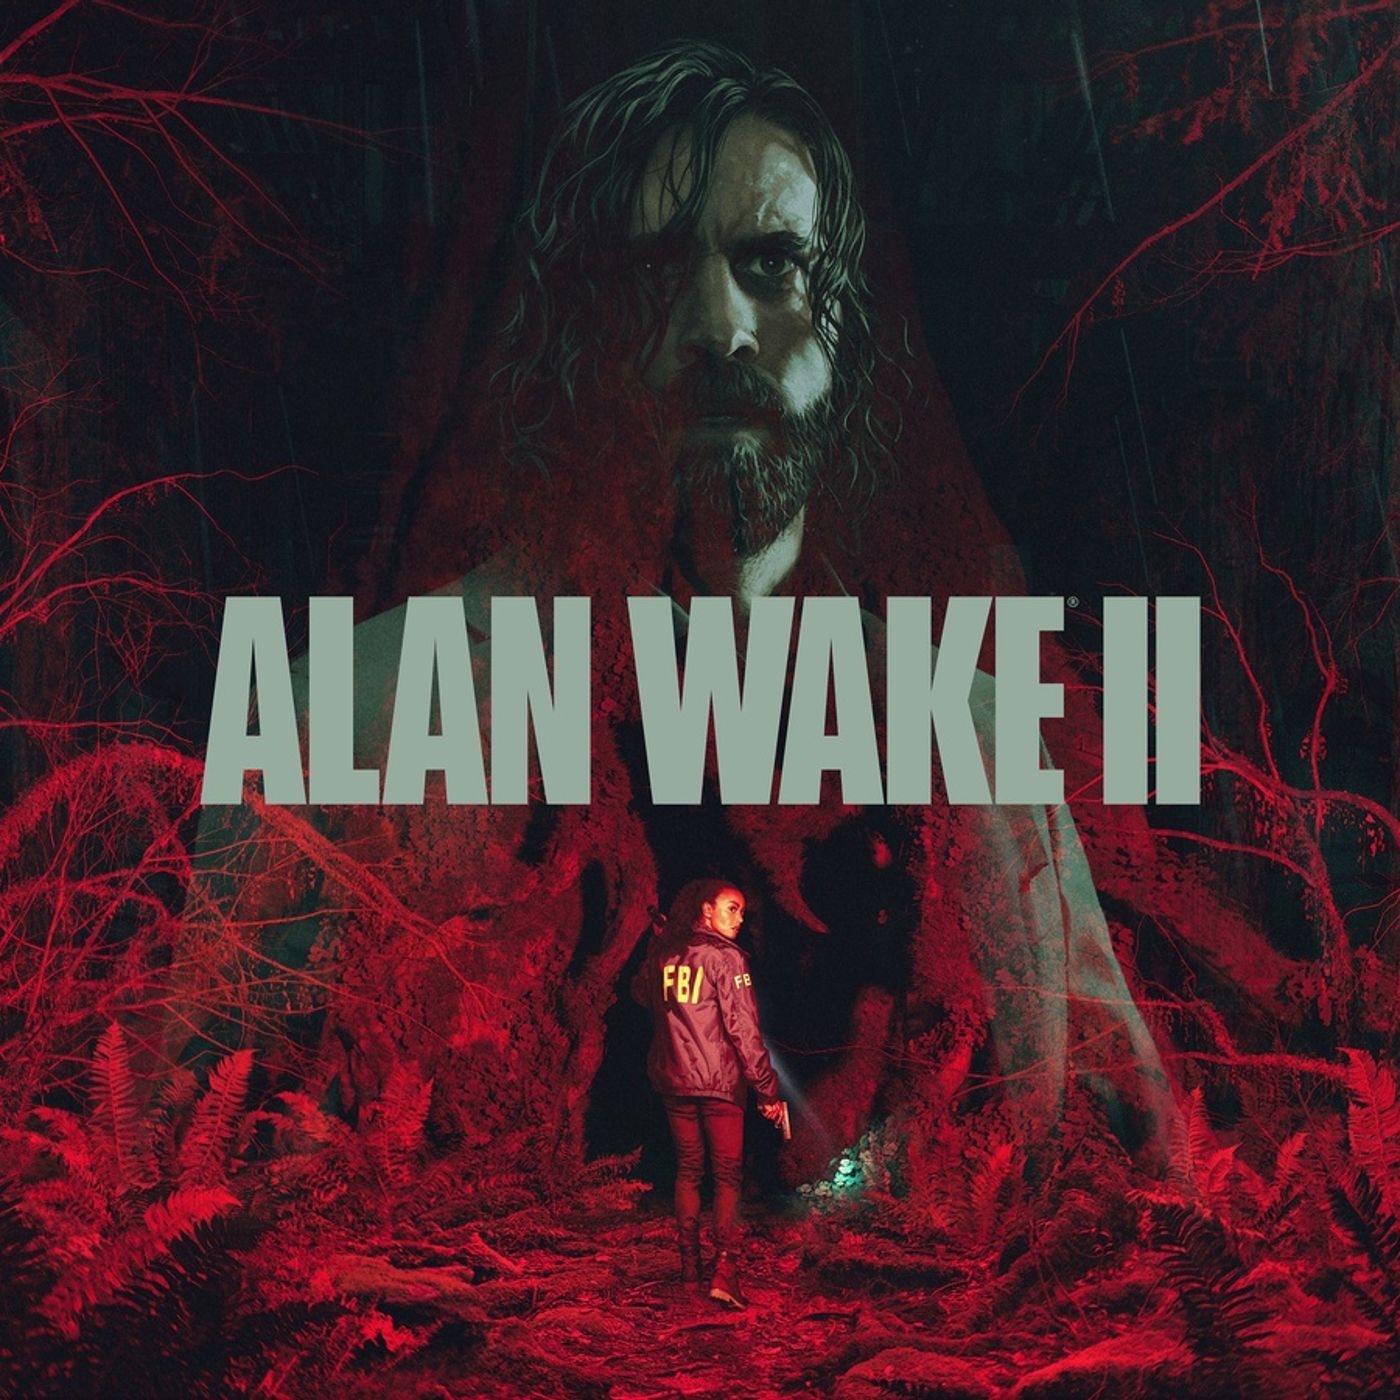 S18 Ep1312: Alan Wake 2 Review